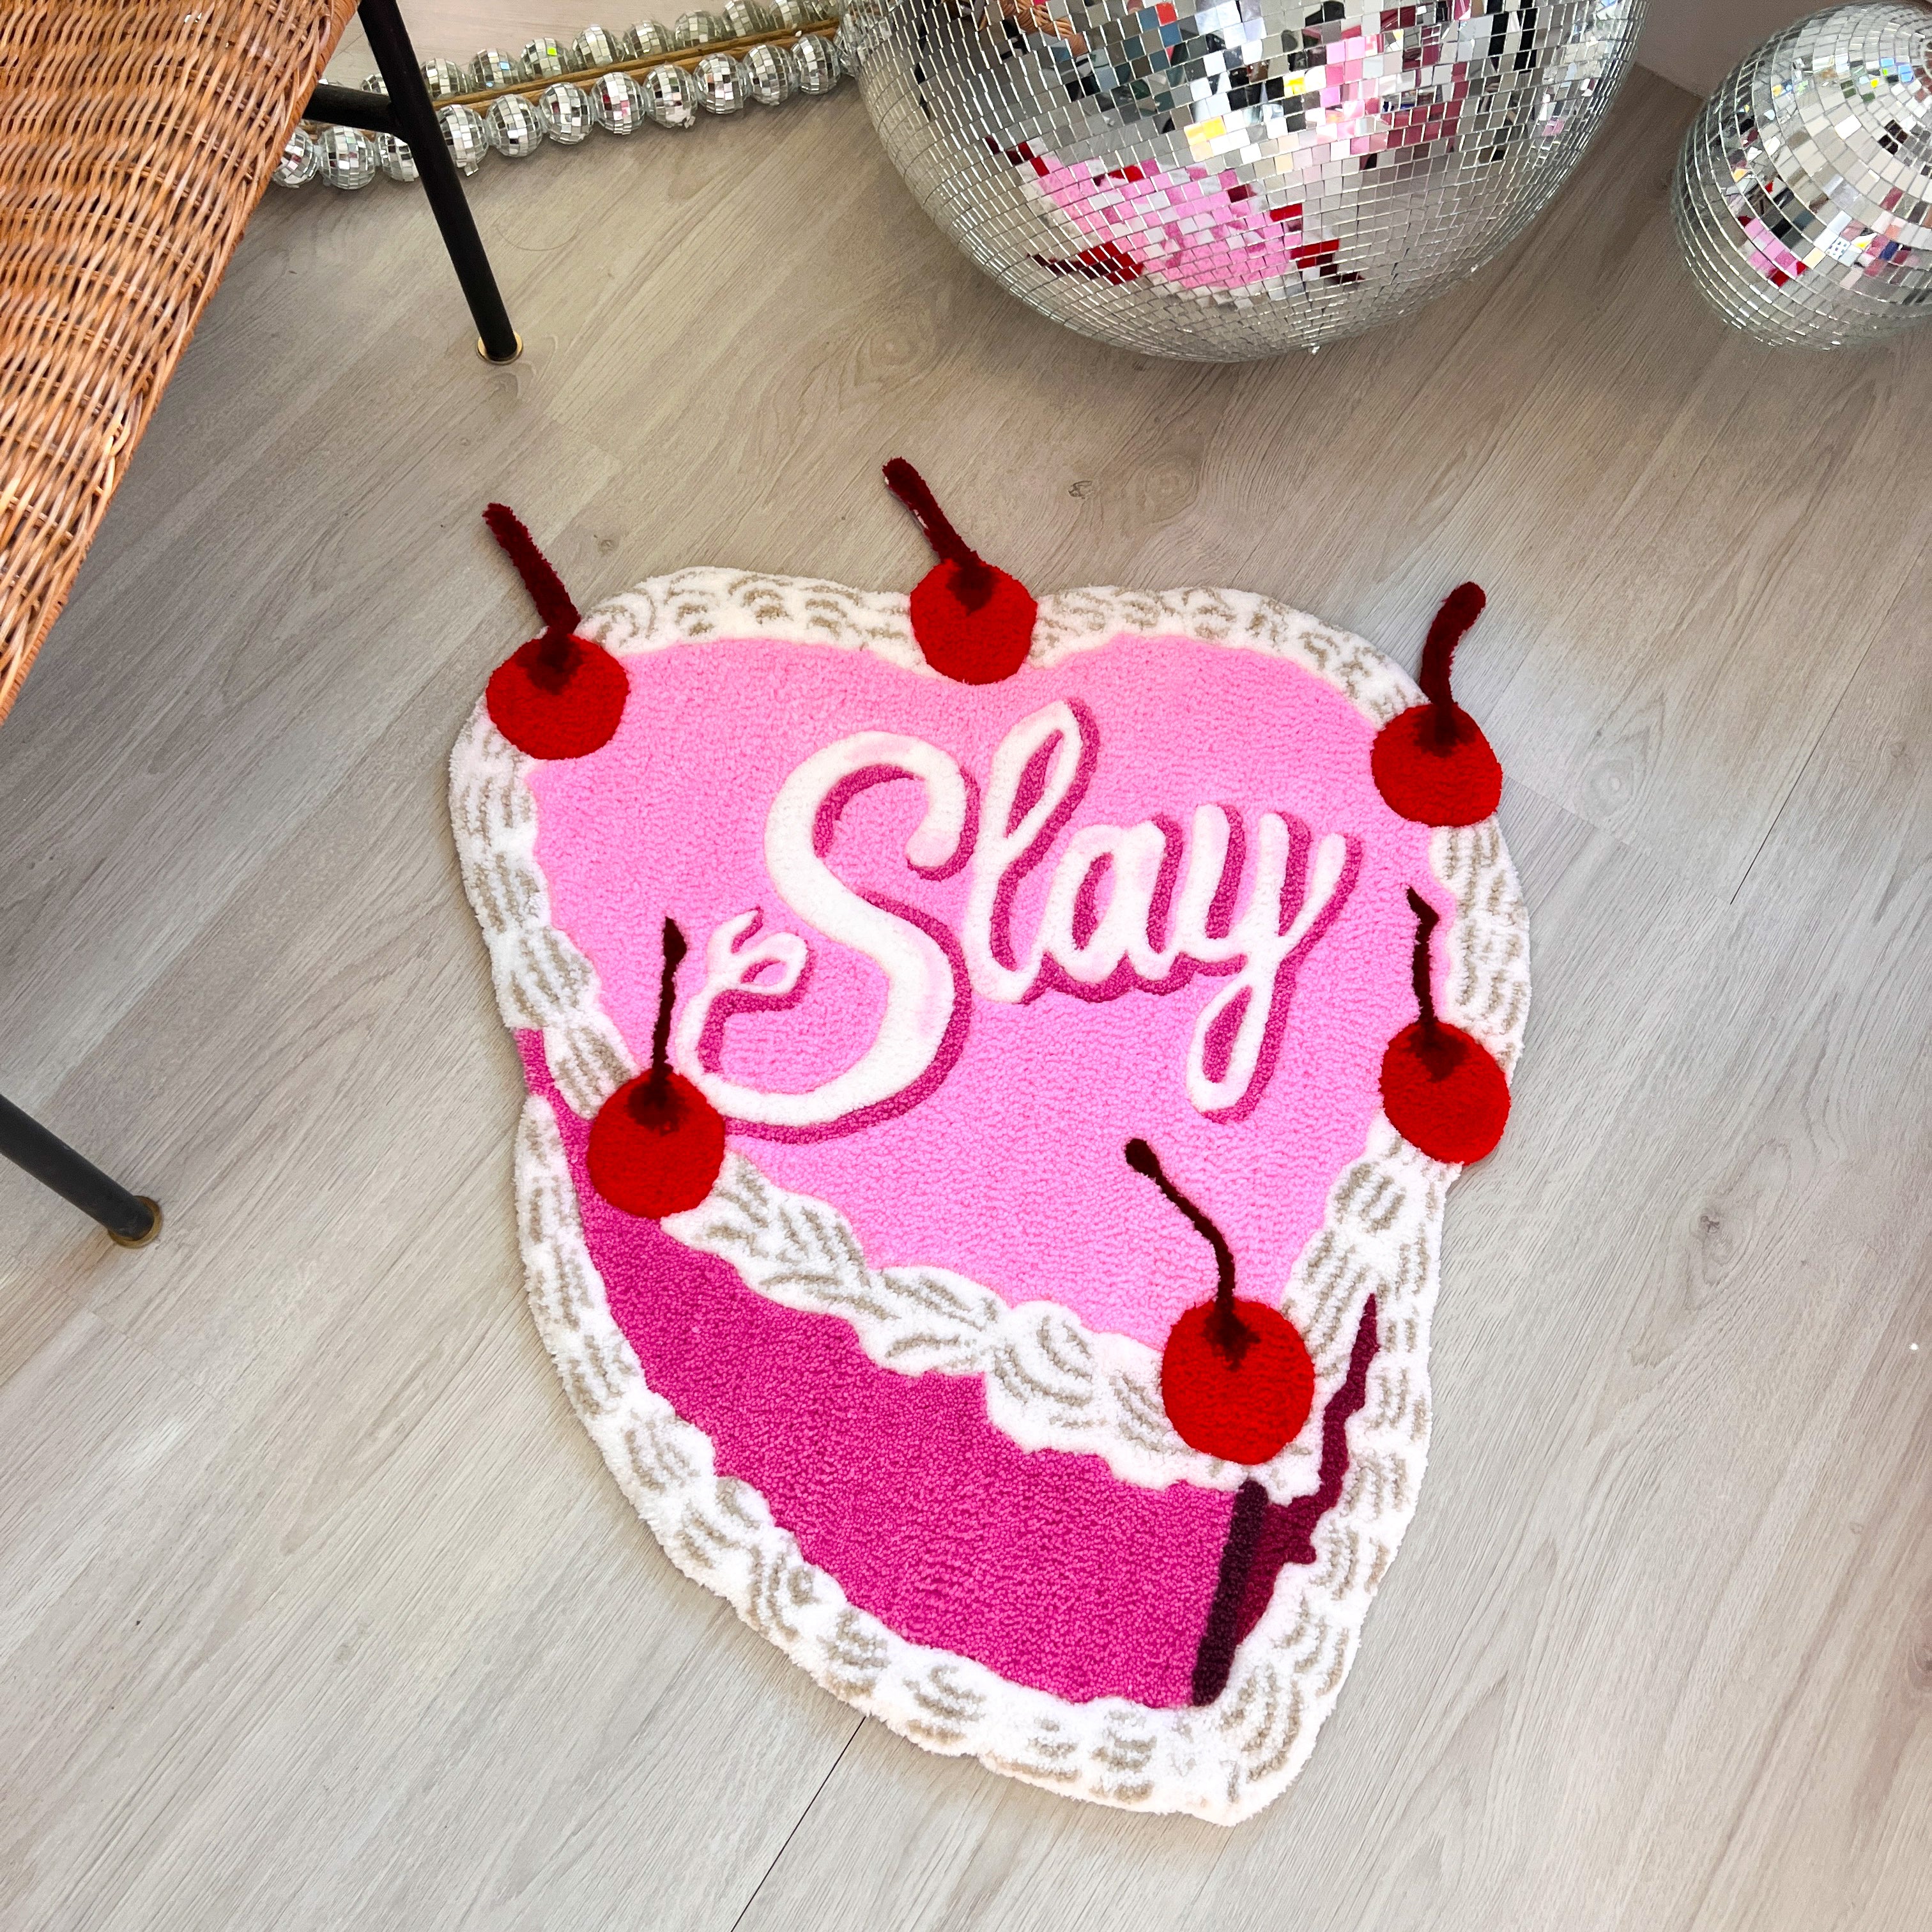 Slay cake Rug